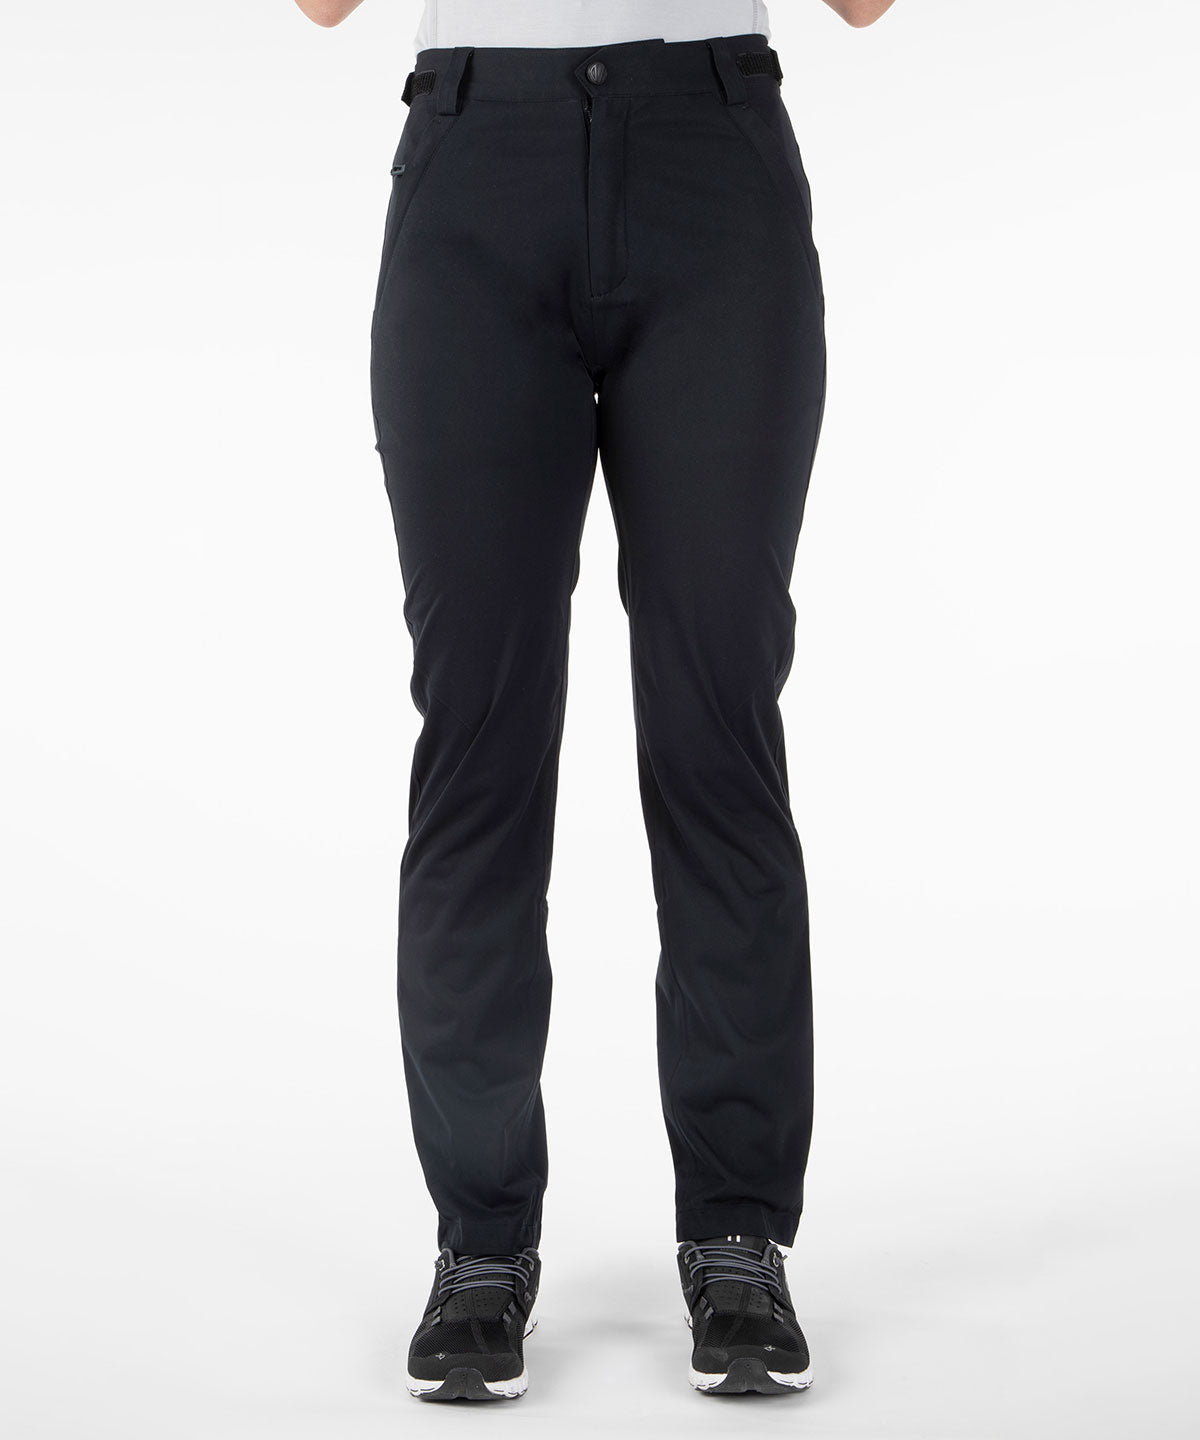 Pantalon Janie Zephal FlexTech Waterproof Ultra-Stretch 2.5 pour femme - Noir